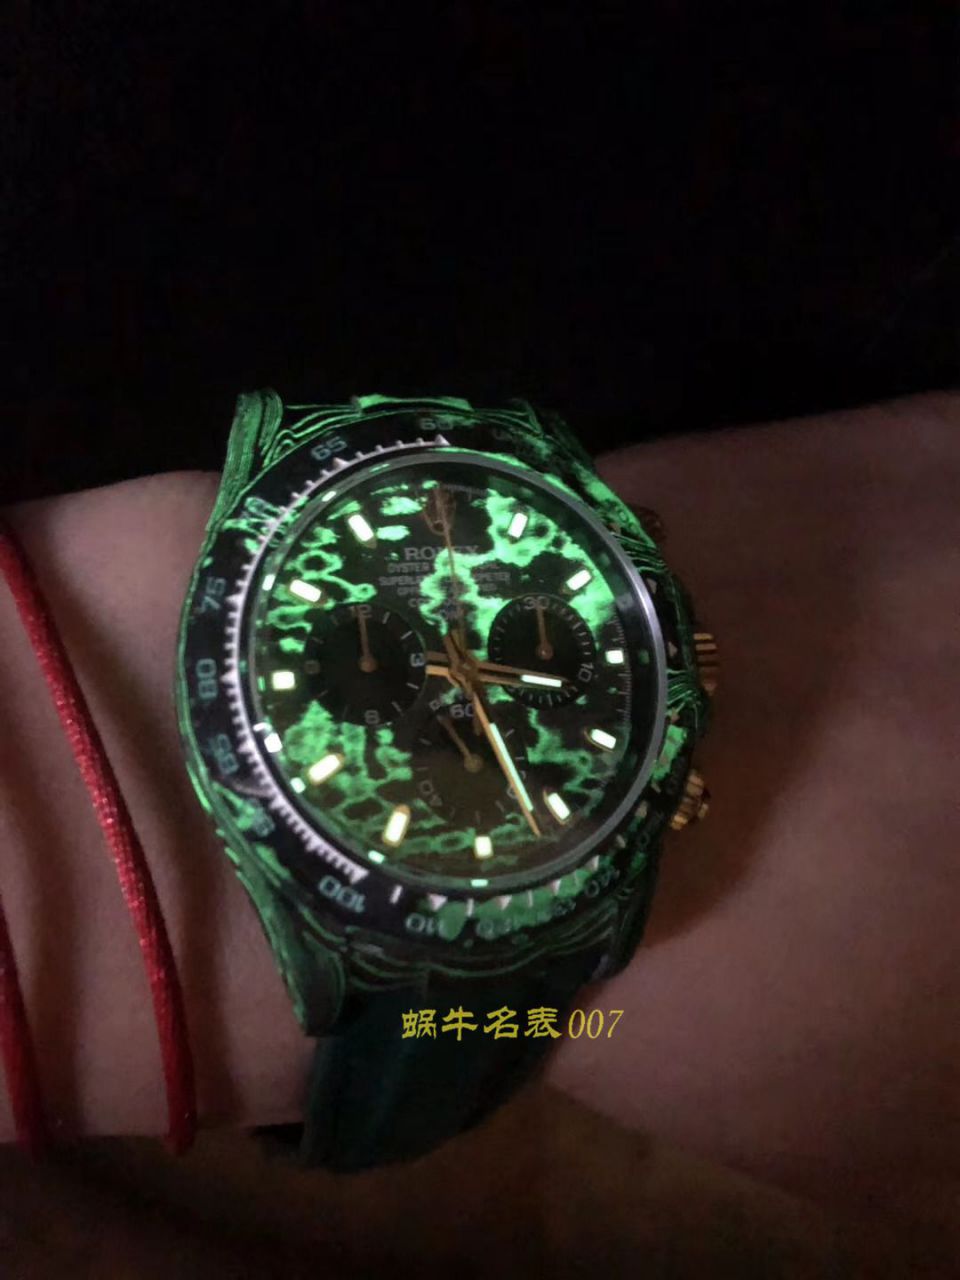 【TW厂劳力士复刻手表】劳力士ROLEX宇宙计时迪通拿系列之全碳纤维海外定制版 